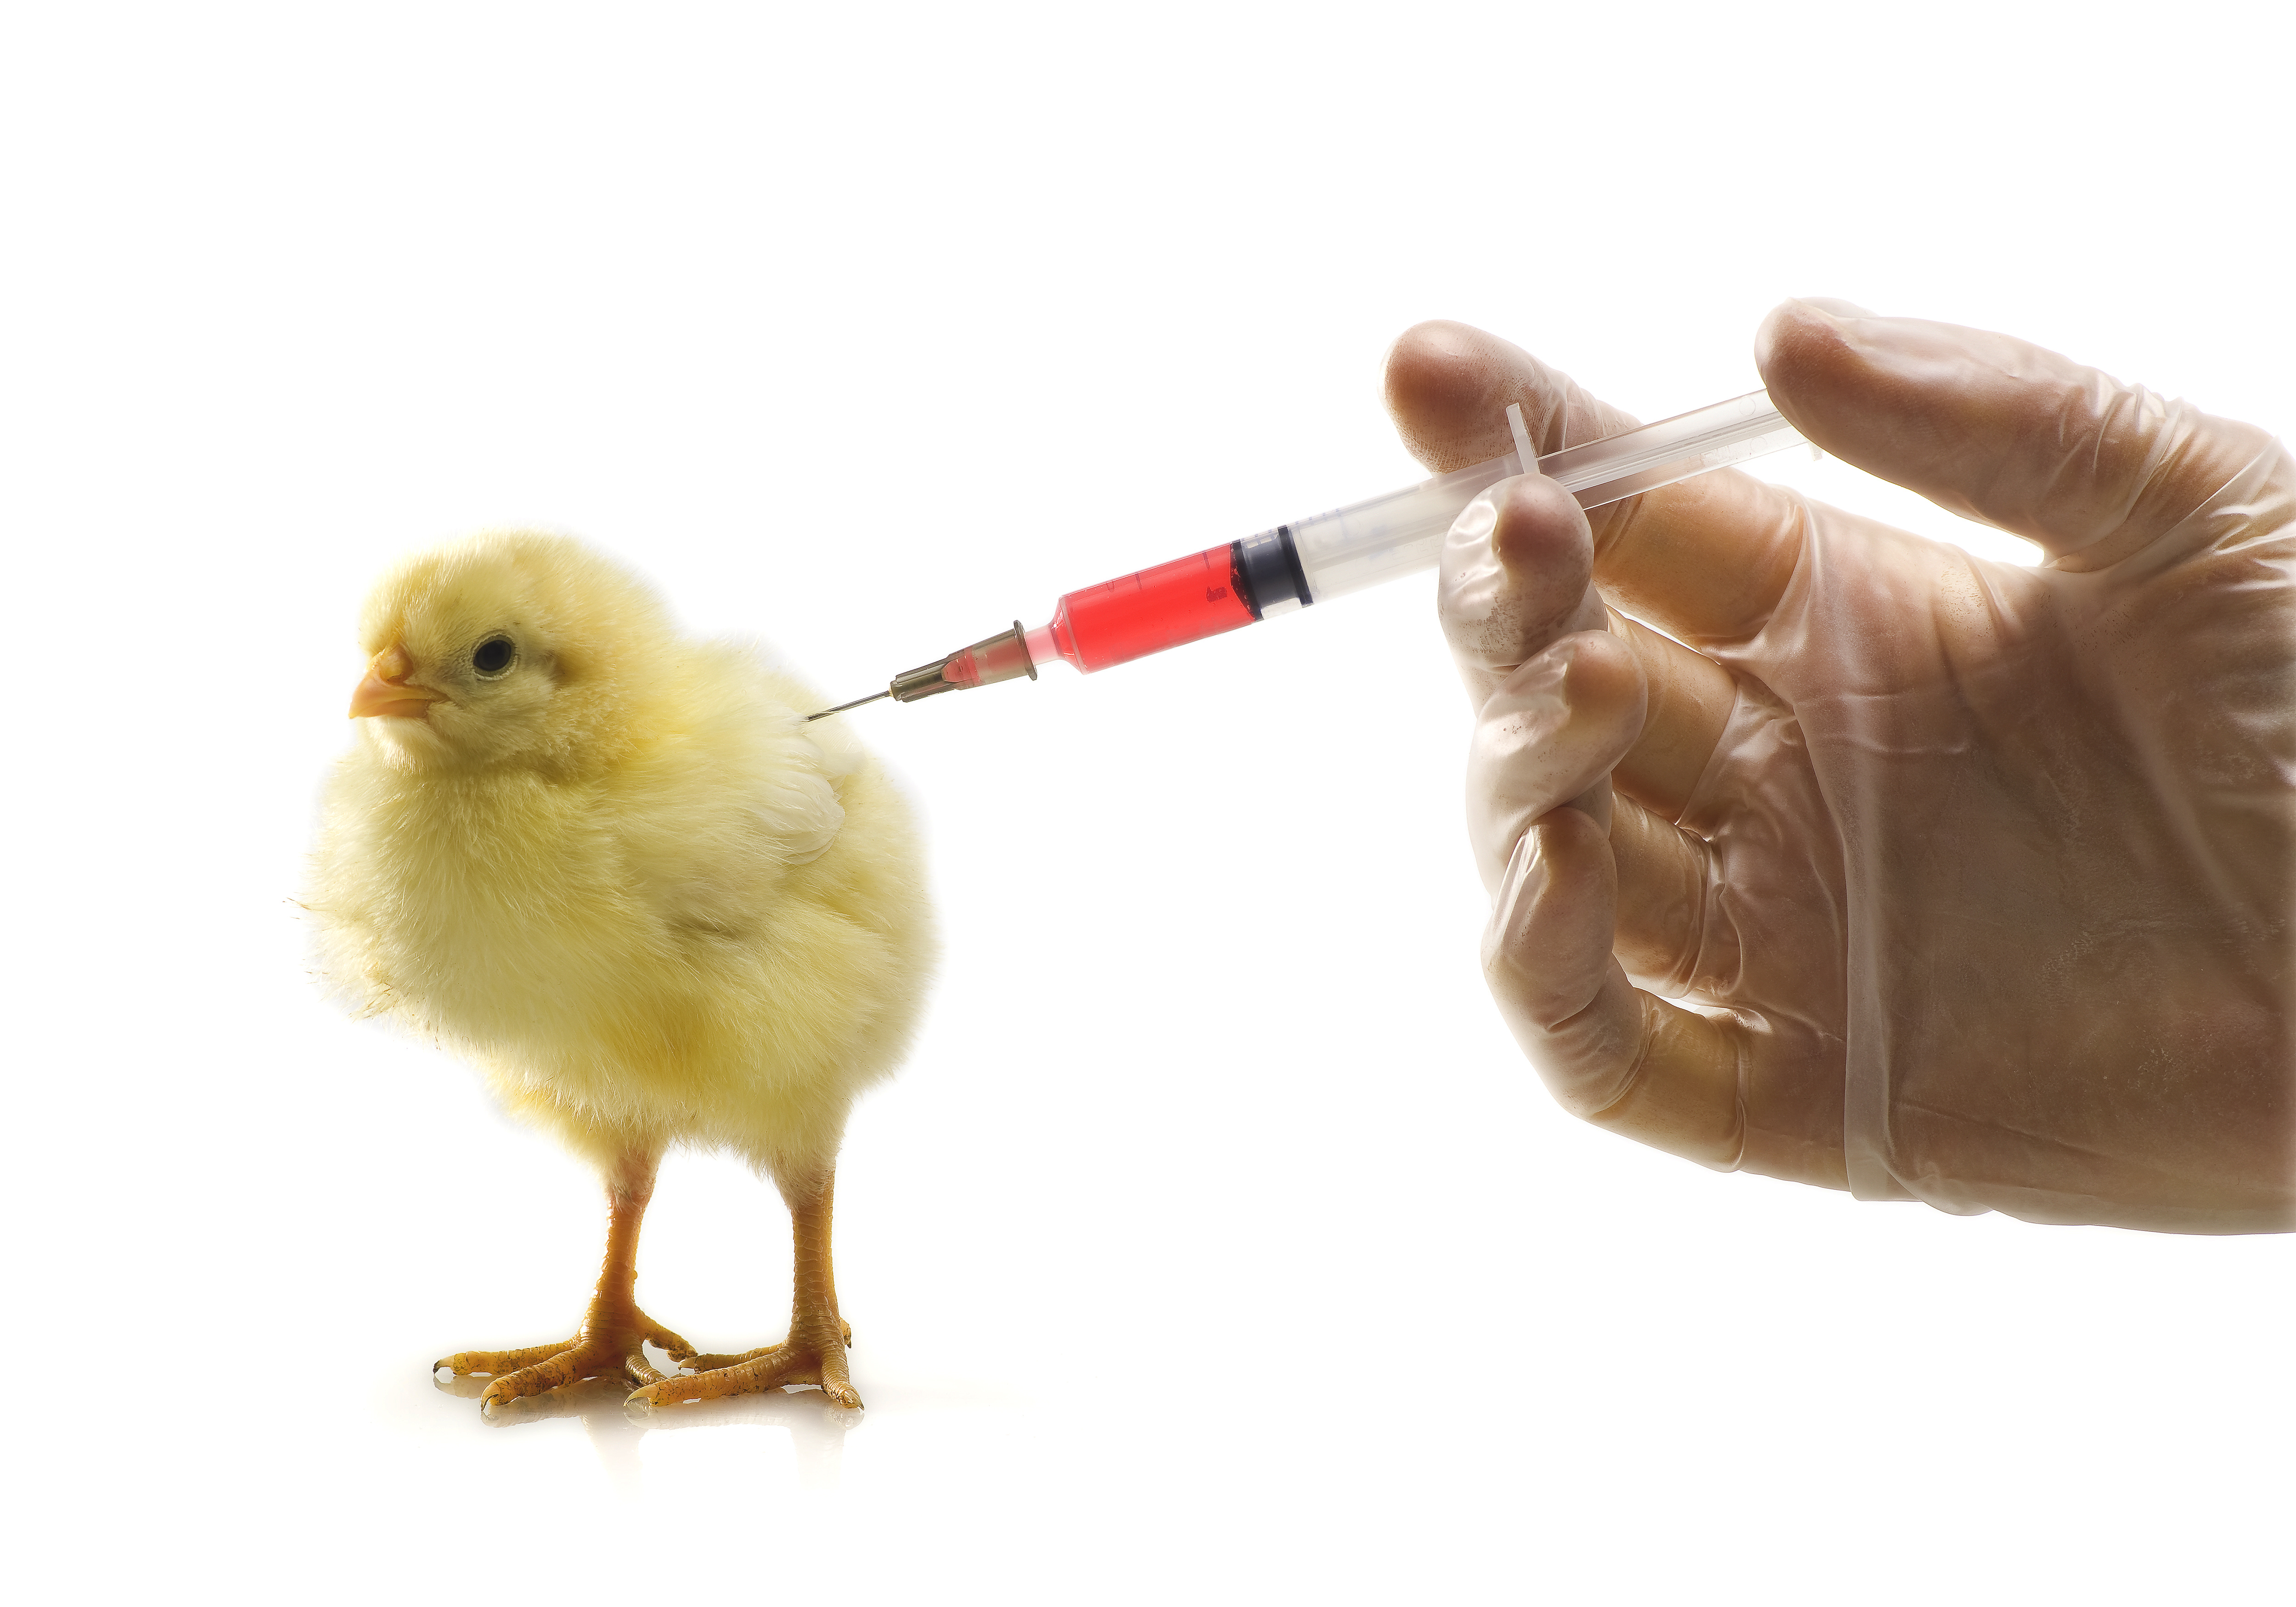 Прививка от птичьего гриппа. Инфекционный бронхит птиц вакцина. Вакцинация цыплят. Вакцинация птицы на птицефабрике. Вакцинация бройлеров.